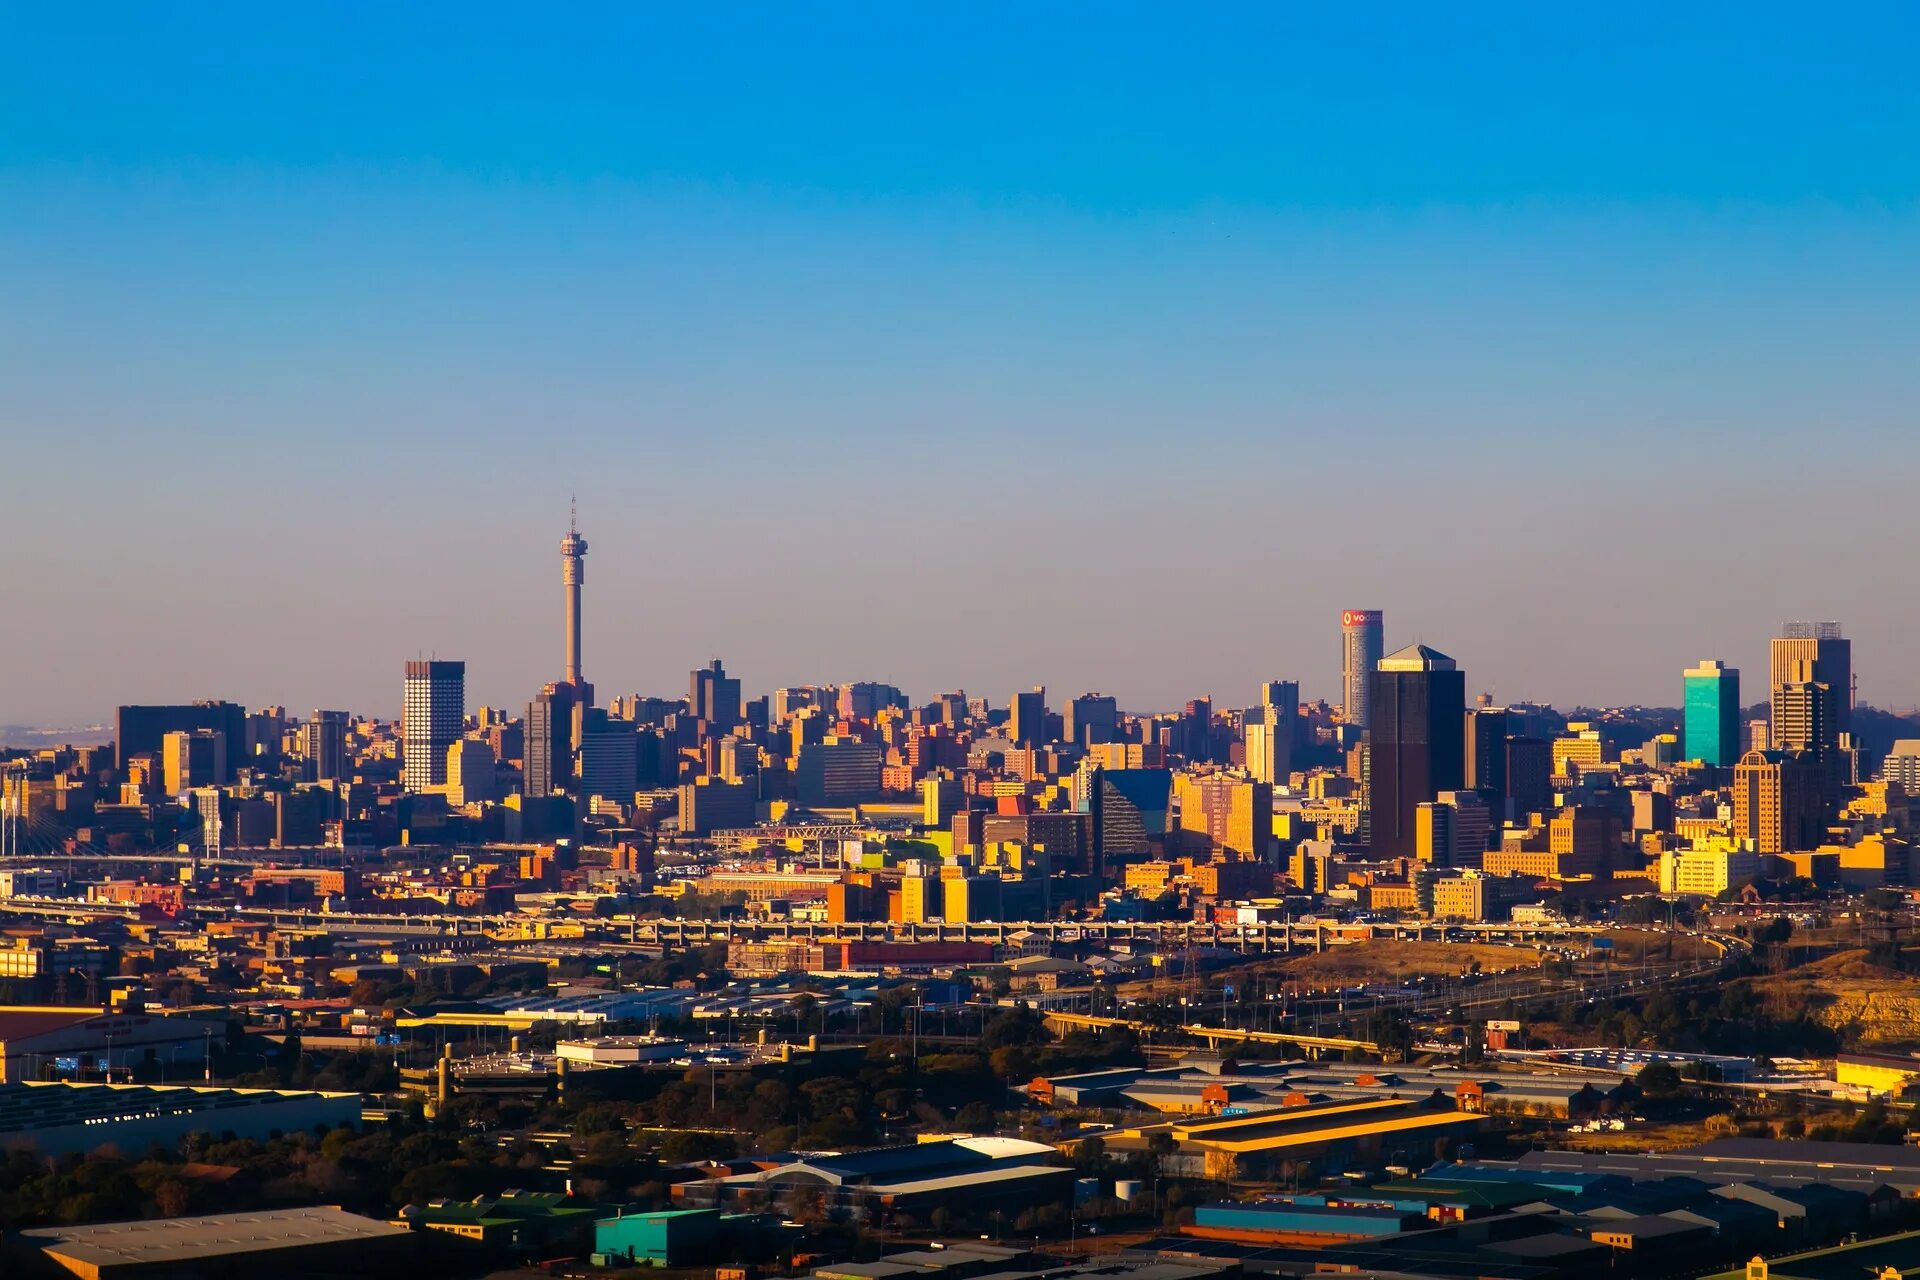 Africa city. ЮАР Йоханнесбург. Южная Африка Йоханнесбург. ЮАР город Йоханнесбург. Южная Африка столица Йоханнесбург.